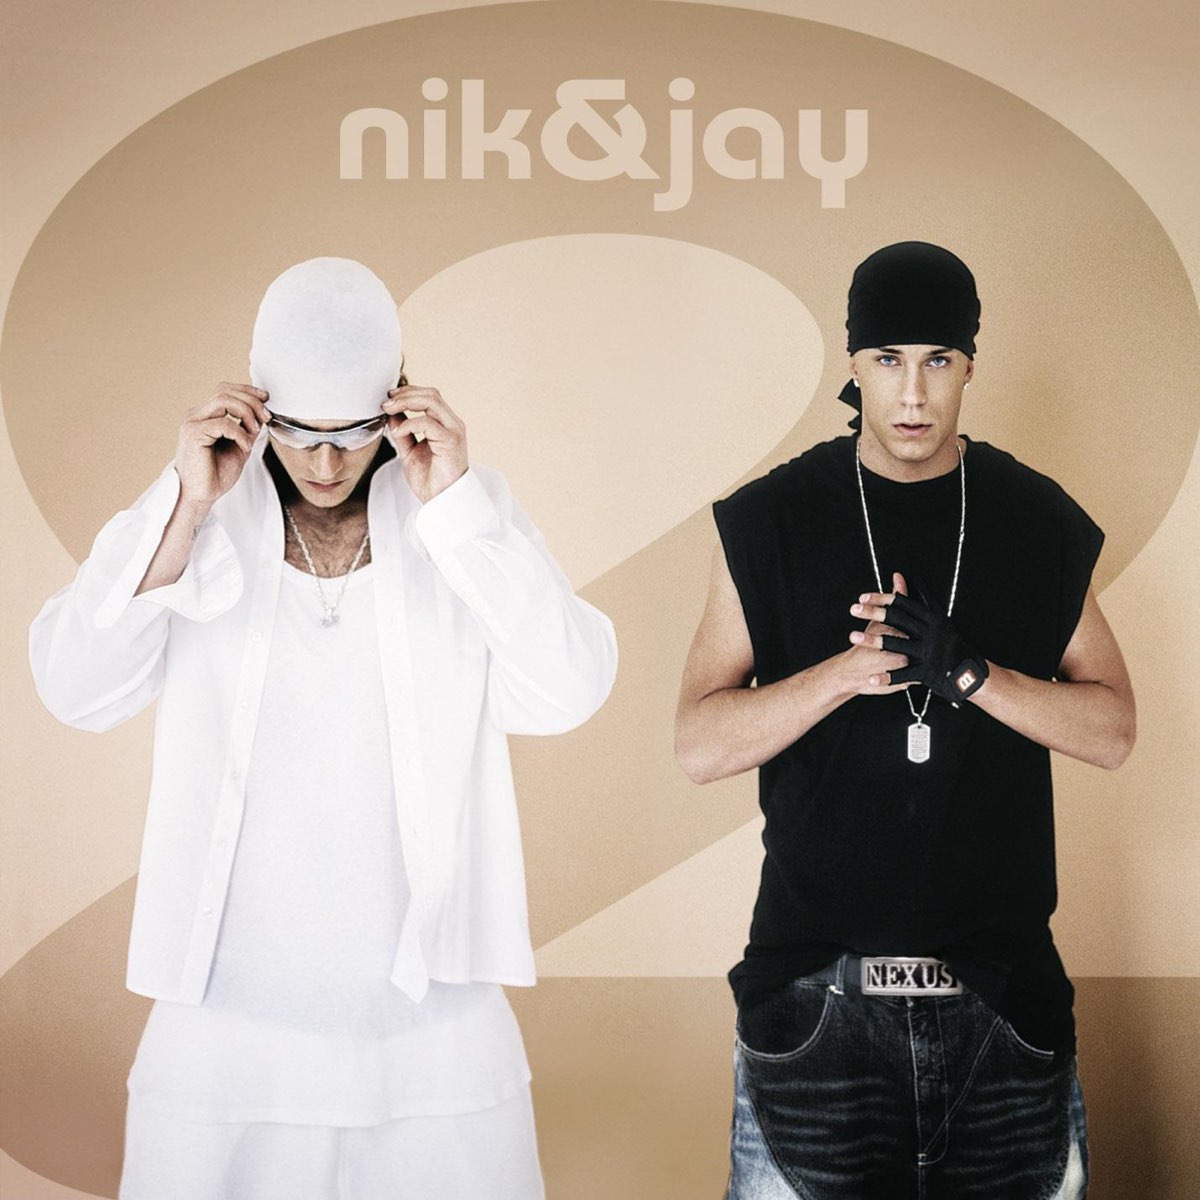 ‎Nik & Jay 2 by Nik & Jay on Apple Music